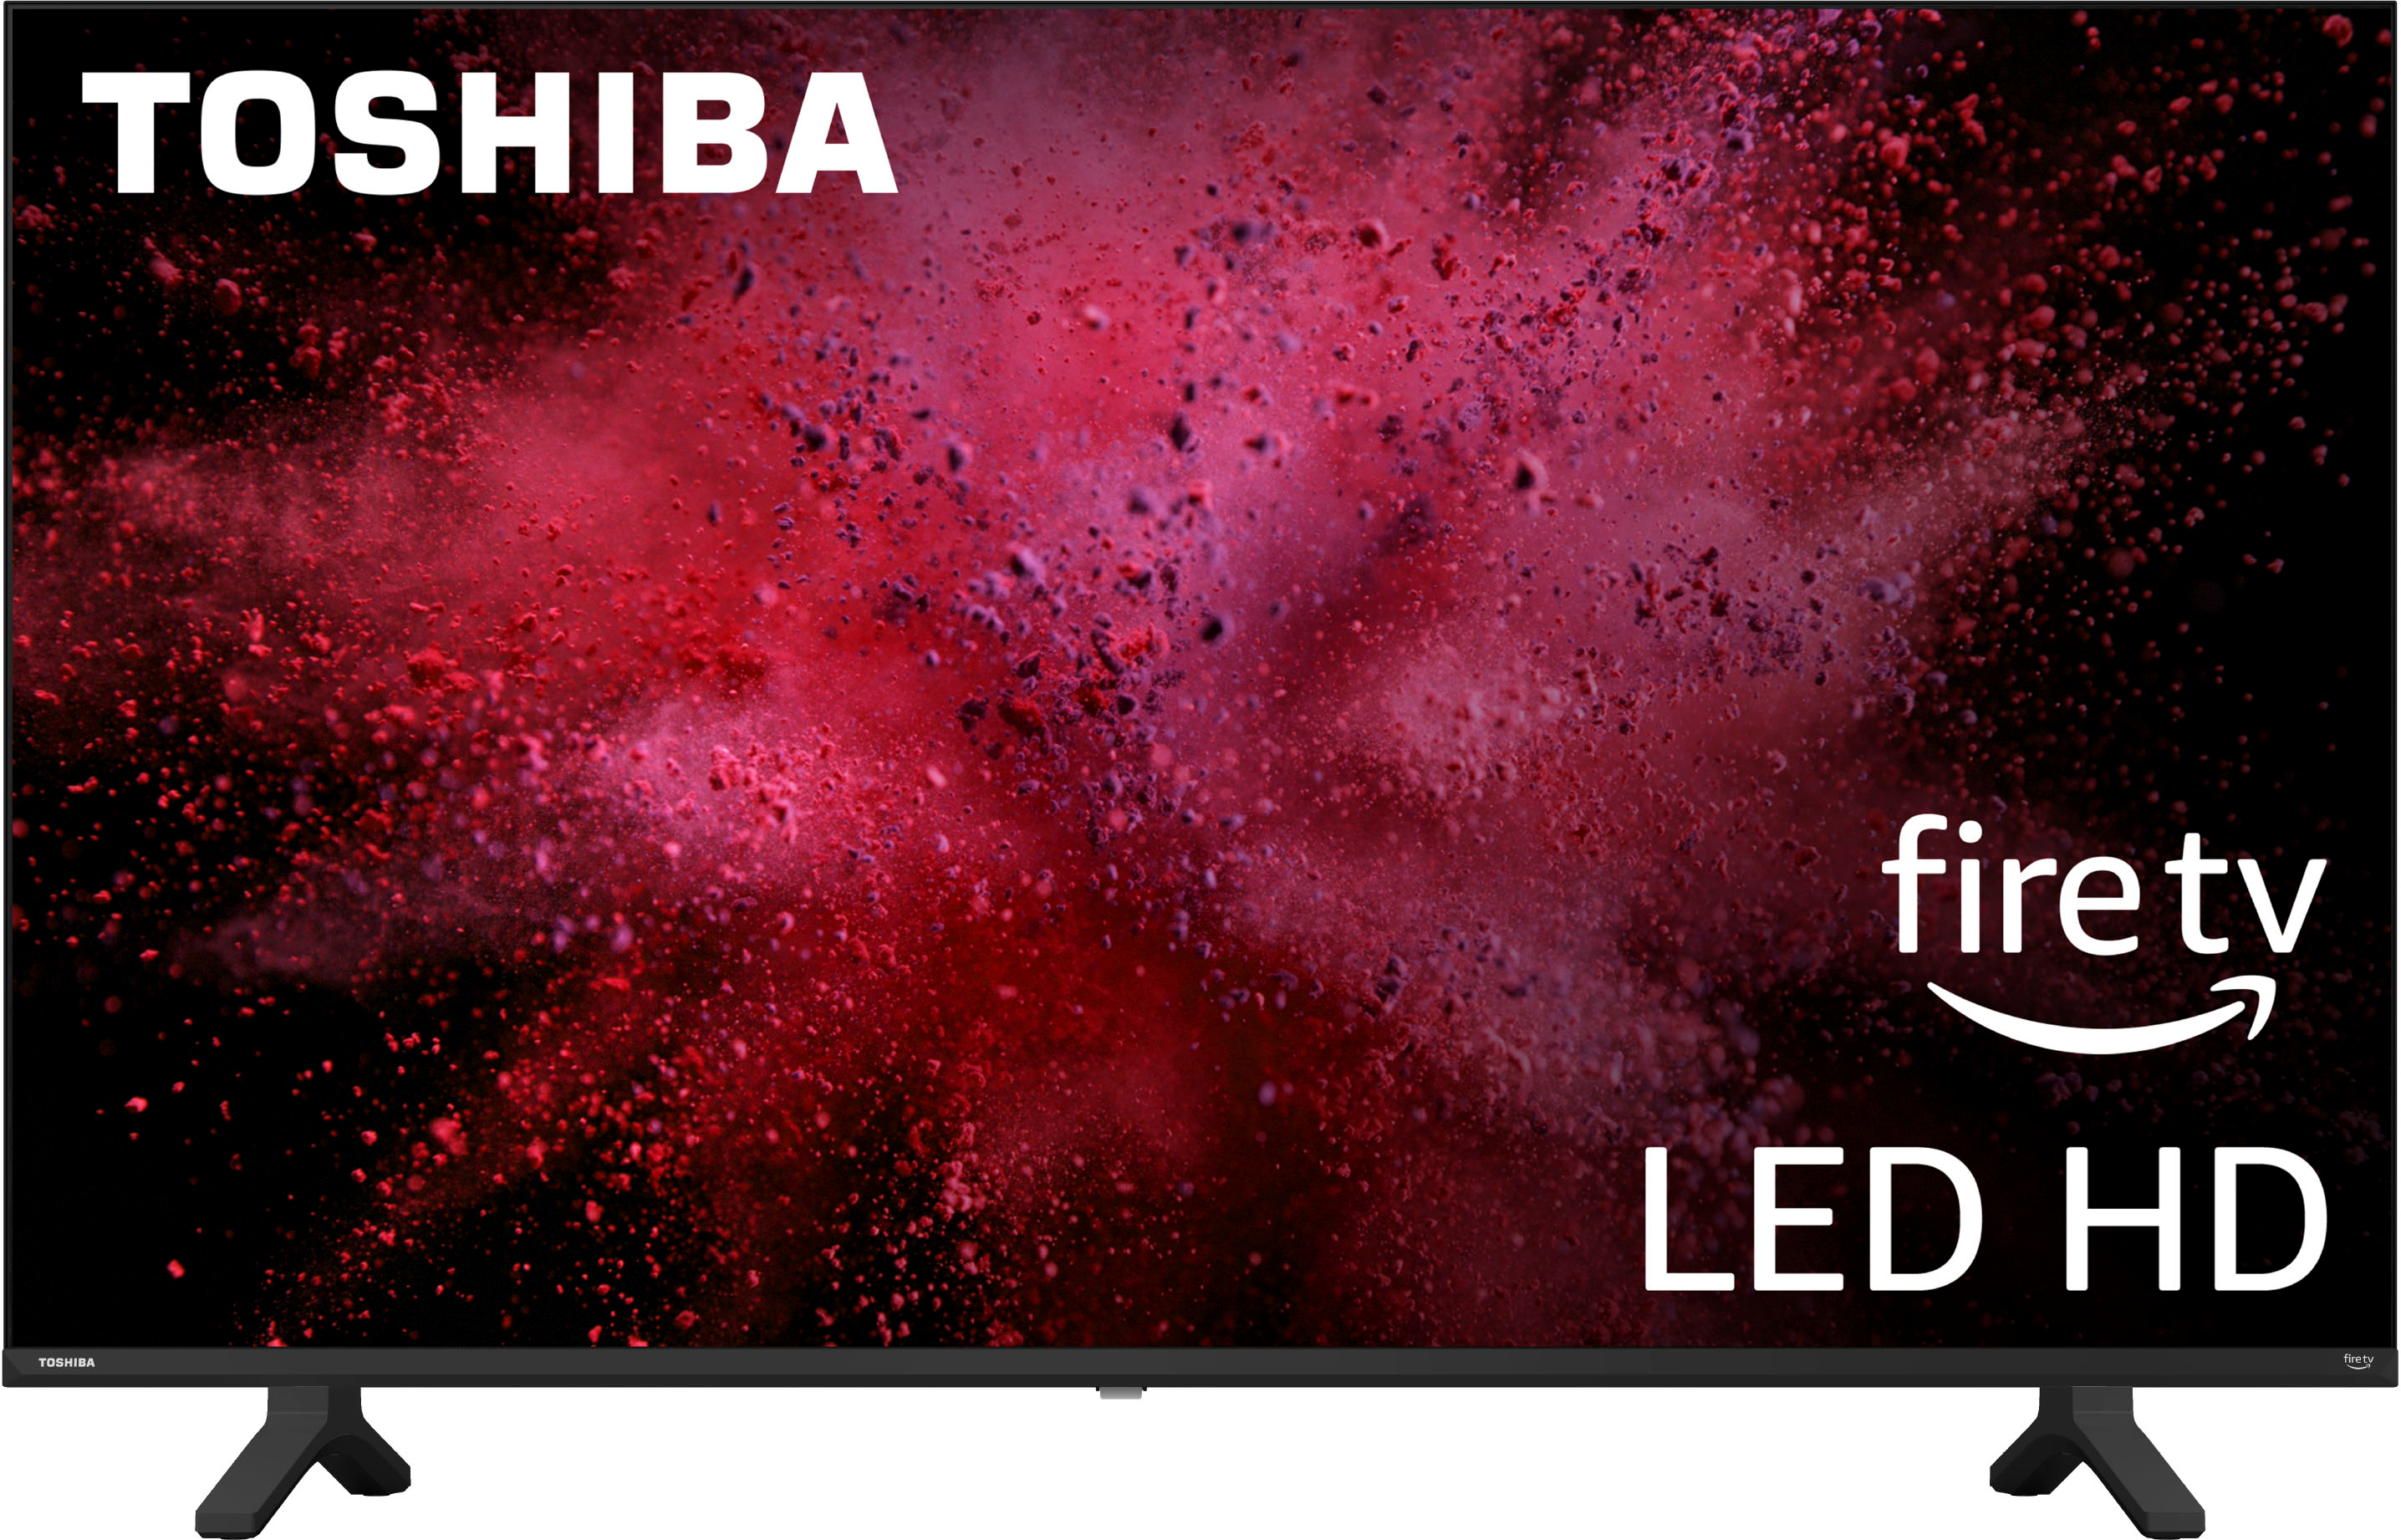 Toshiba Screen Mirroring App  Cast to Toshiba TV Wirelessly